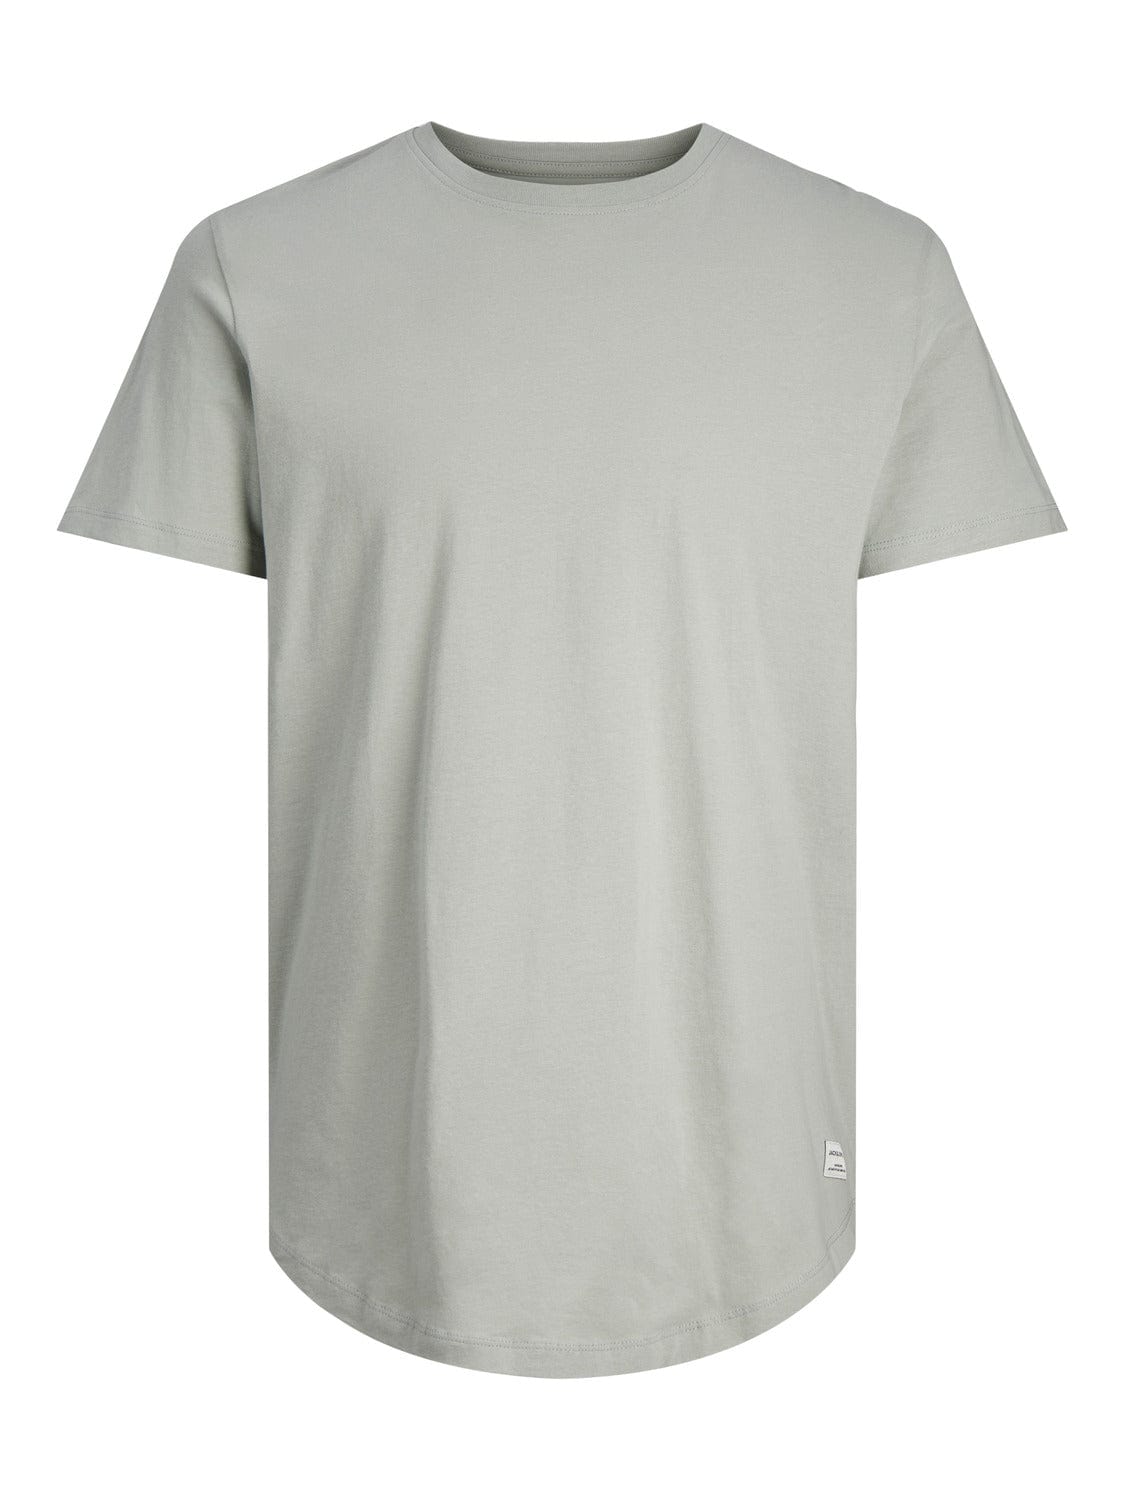 Camiseta manga corta gris claro- JJENOA